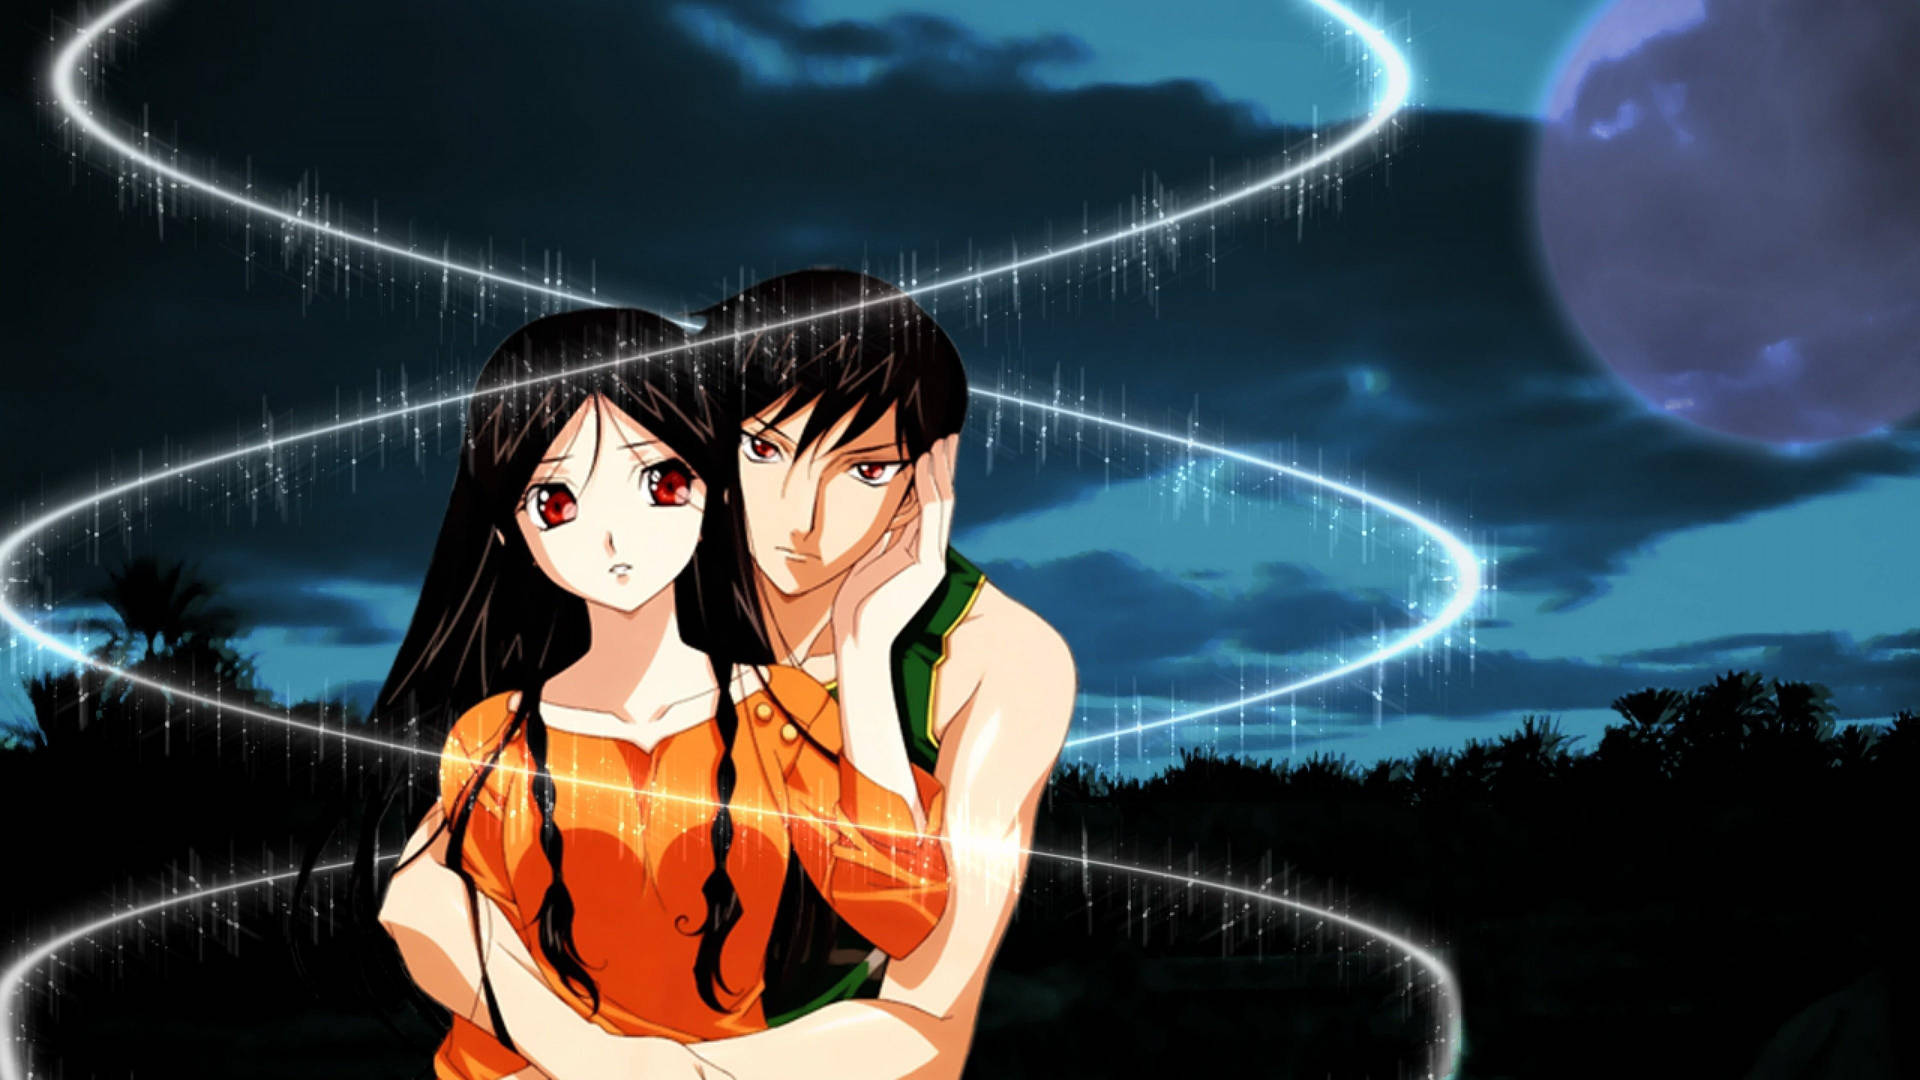 Anime Couple Hug Magic Background